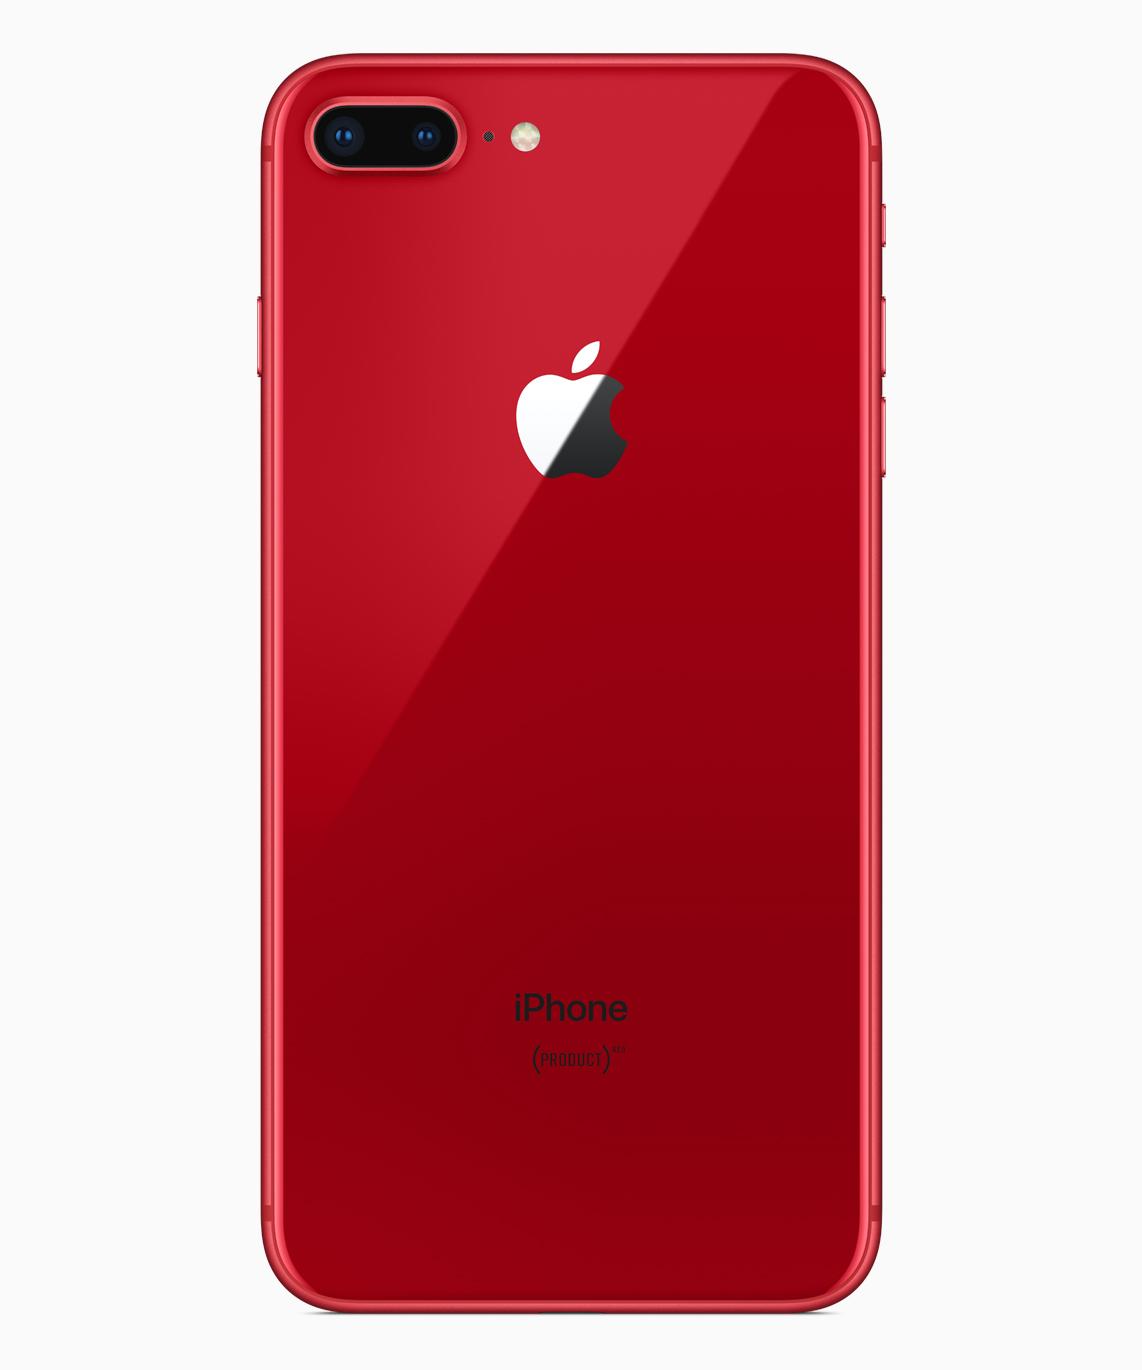 iPhone8カラーiPhone8 RED レッド 赤 - スマートフォン本体